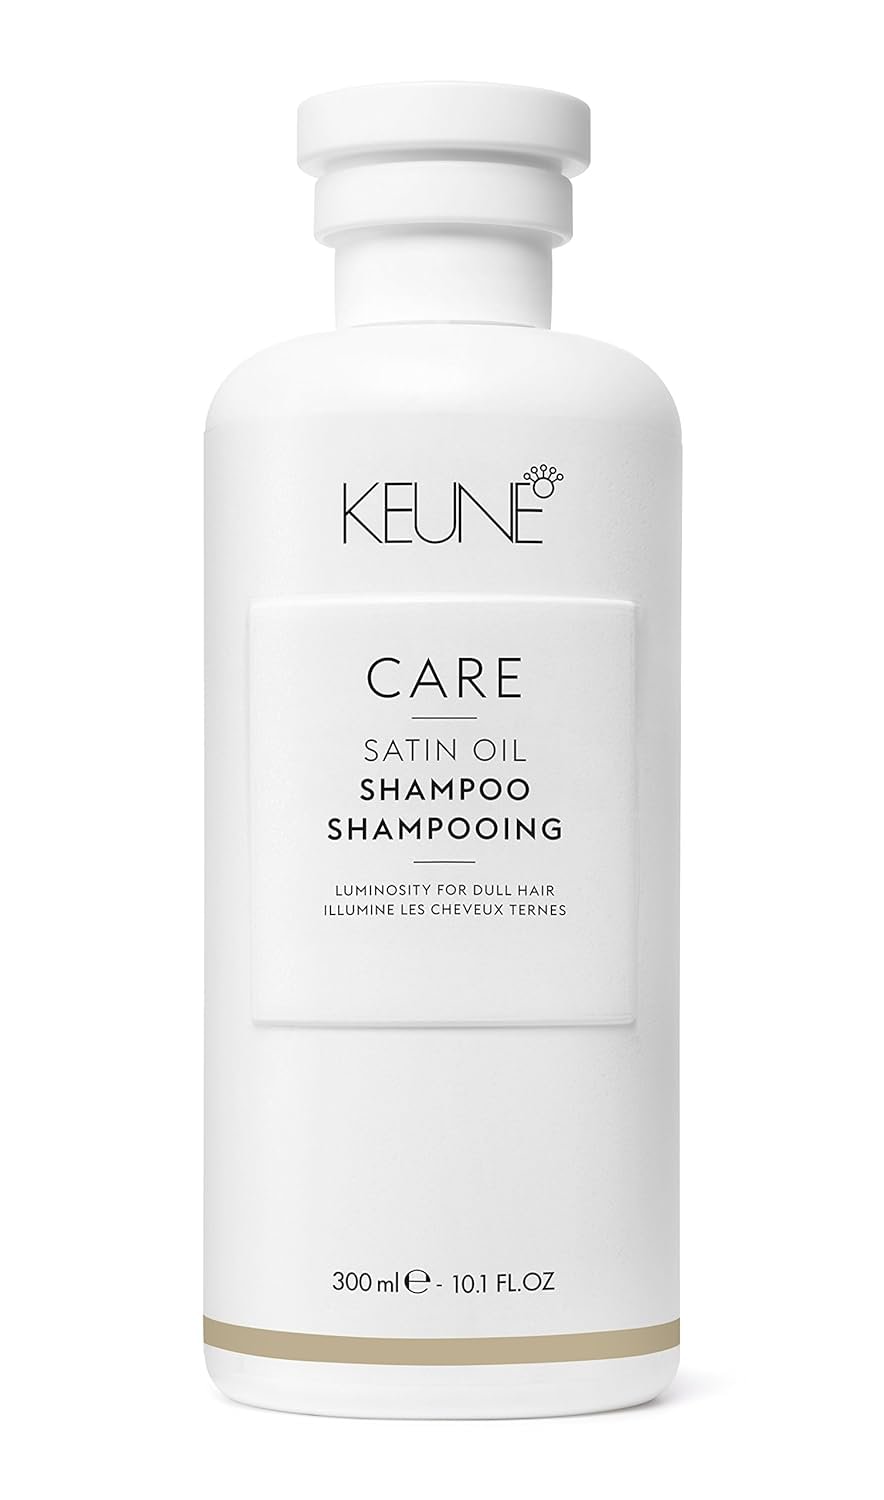 Keune Care Satin Oil shampoo, 300ml